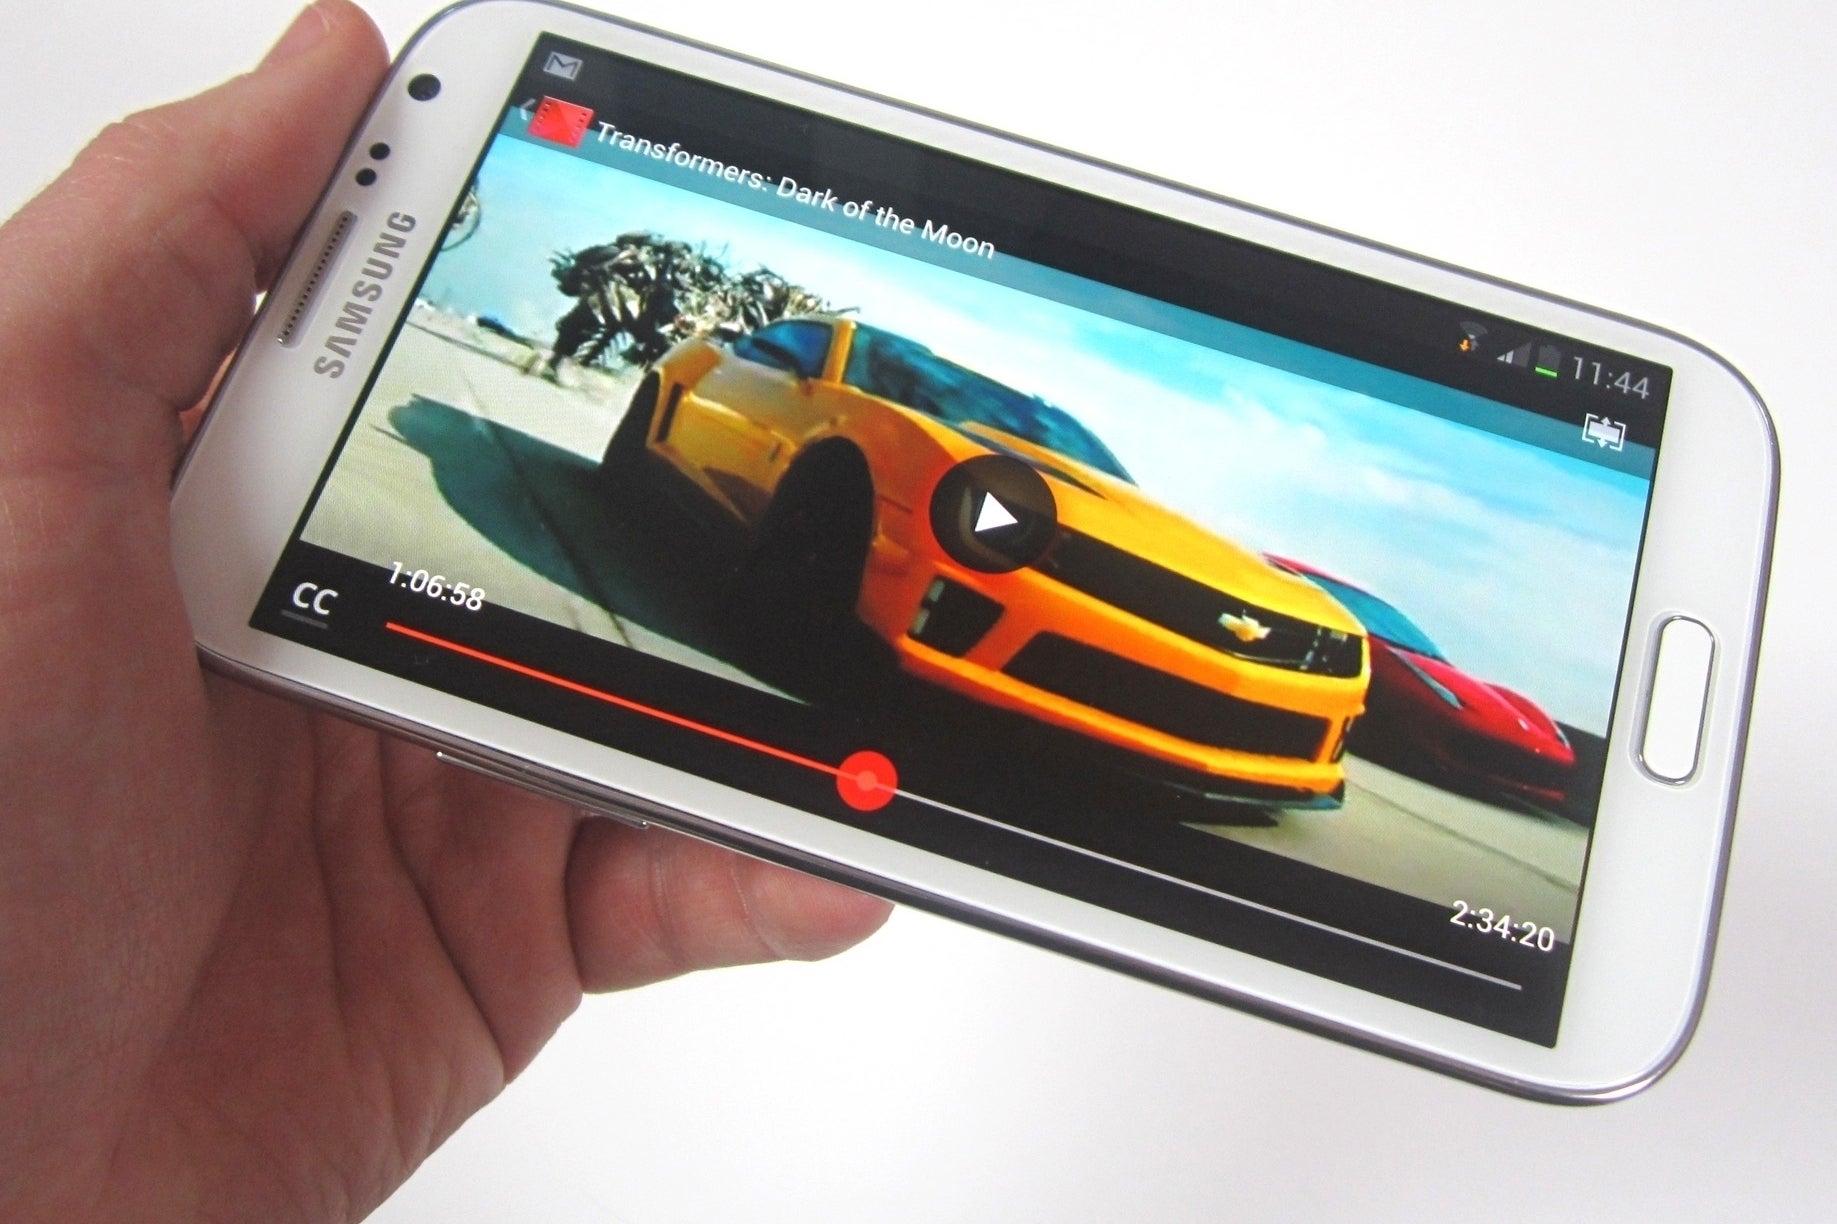 Samsung Galaxy Note 2 review | GamesIndustry.biz